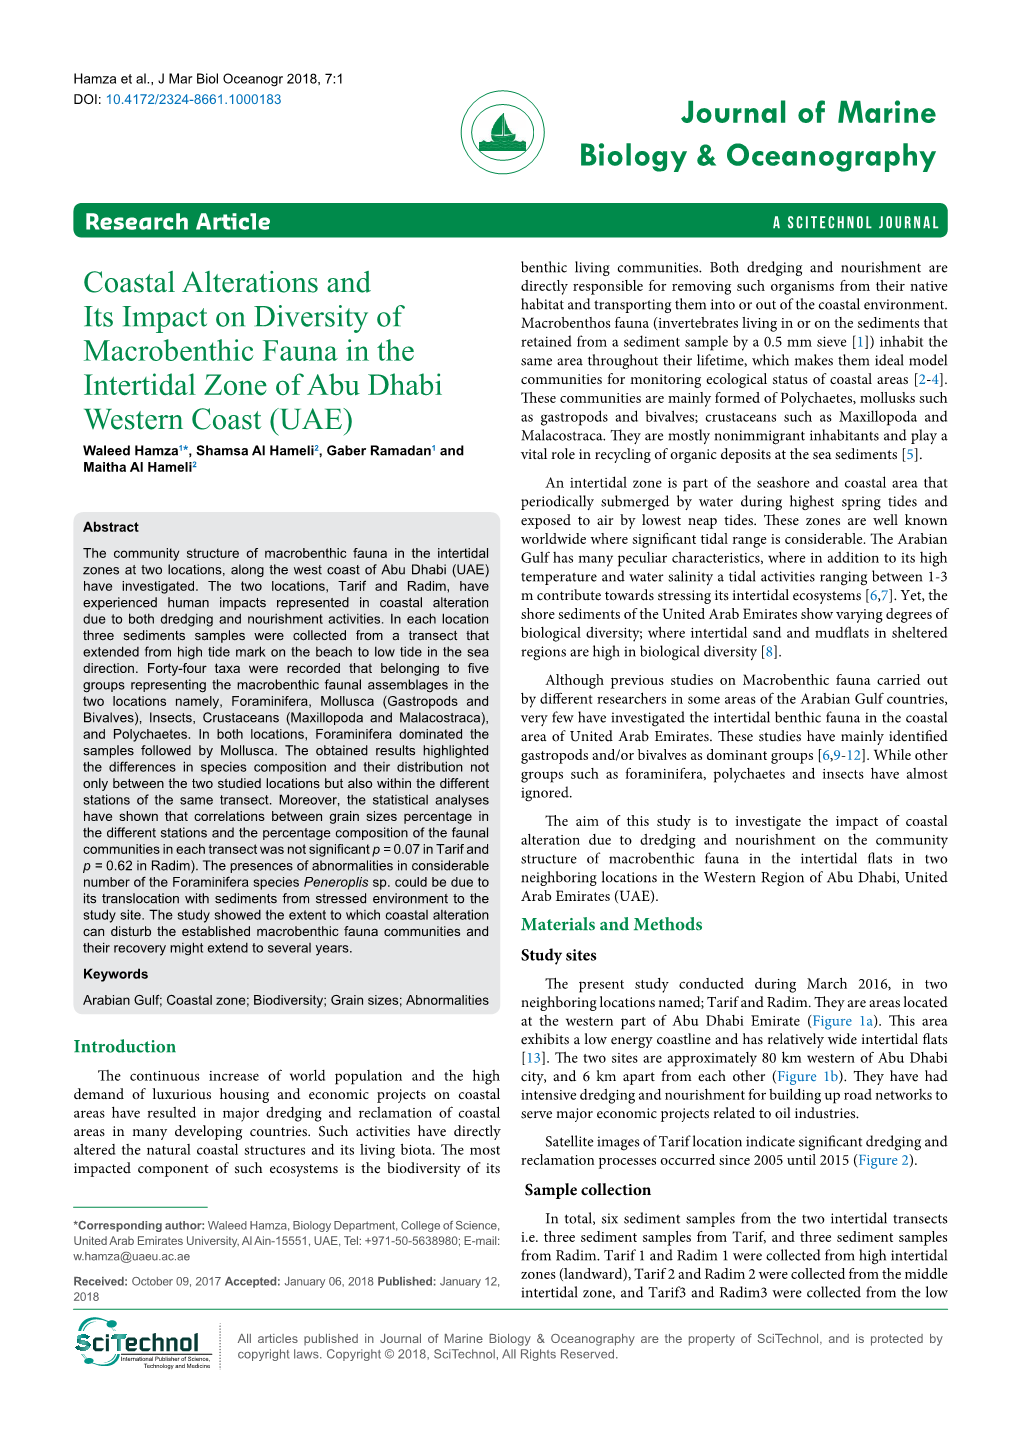 Coastal Alterations and Its Impact on Diversity of Macrobenthic Fauna in the Intertidal Zone of Abu Dhabi Western Coast (UAE)